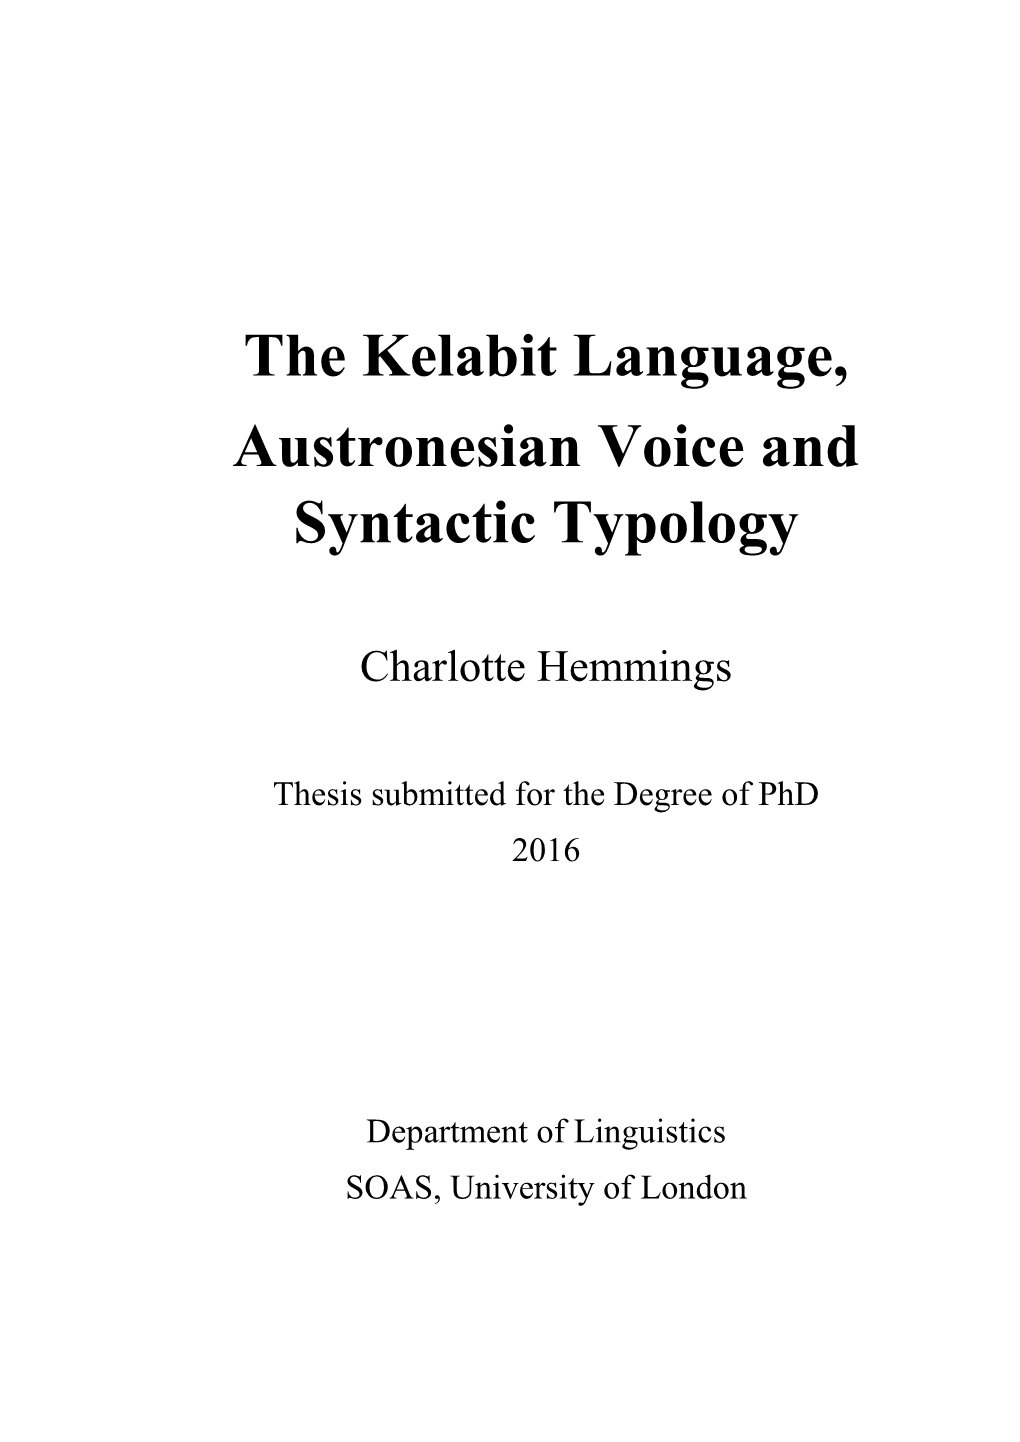 The Kelabit Language, Austronesian Voice and Syntactic Typology